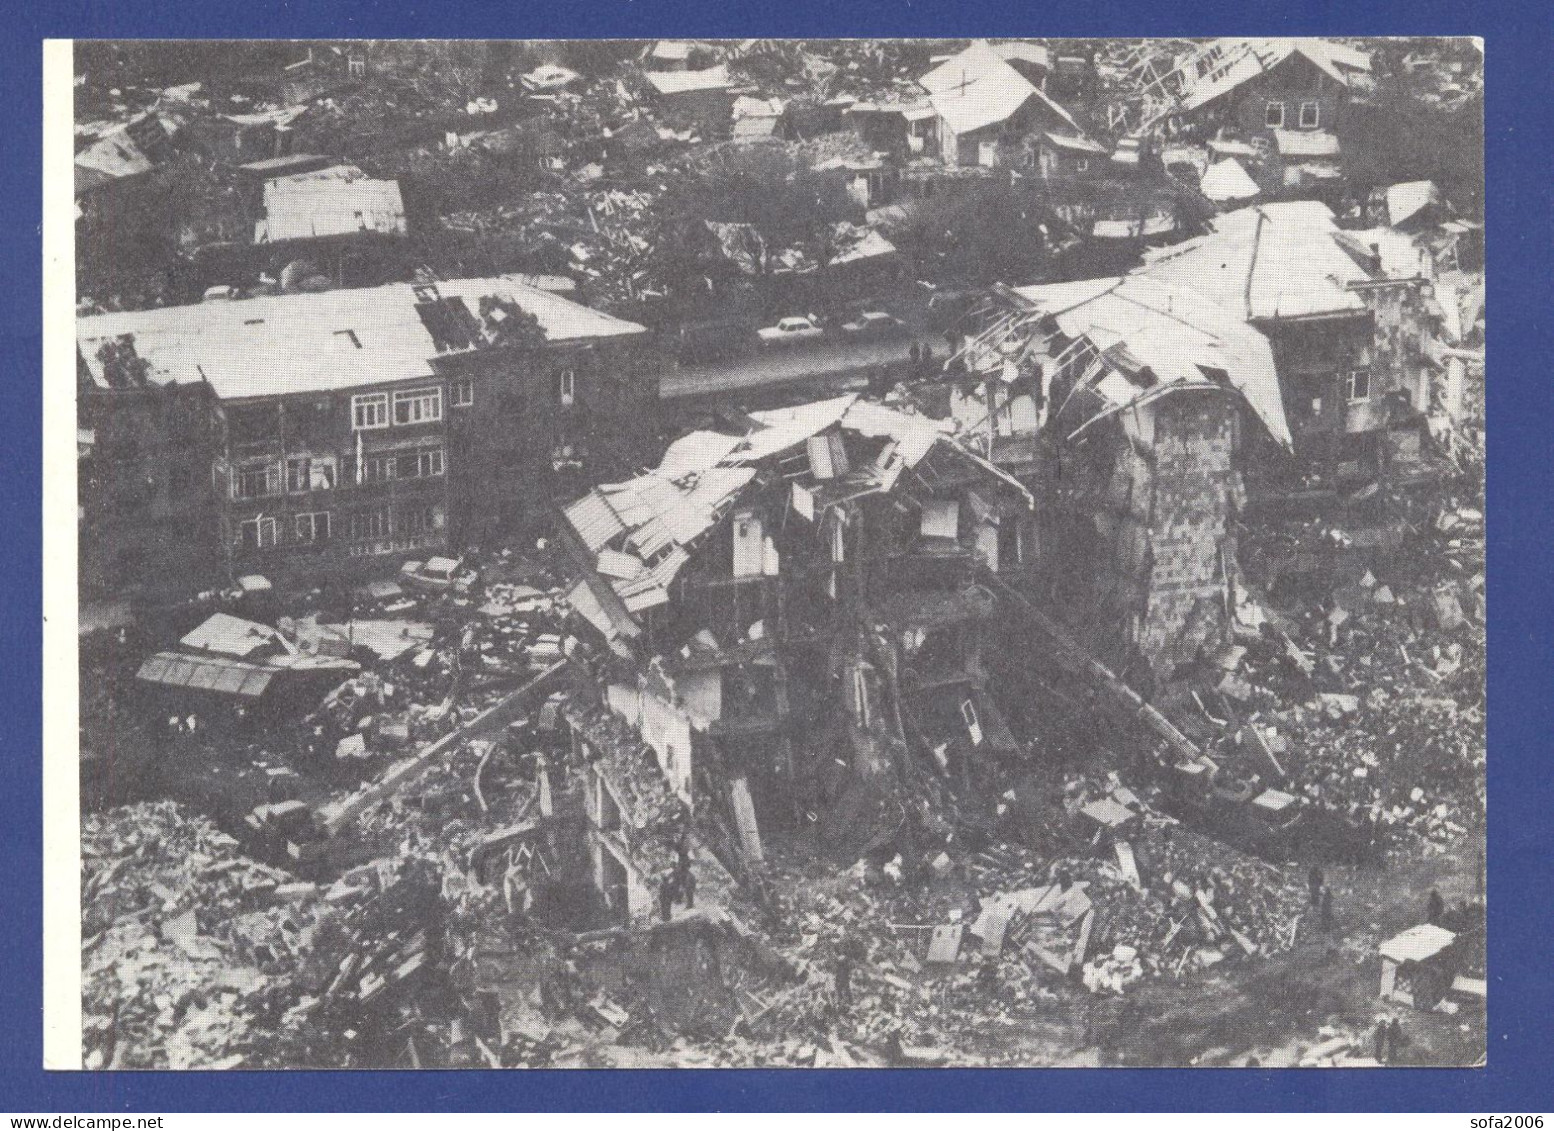 Armenia. Earthquake In Armenia . 7.12. 1988. Spitak City. - Photographie